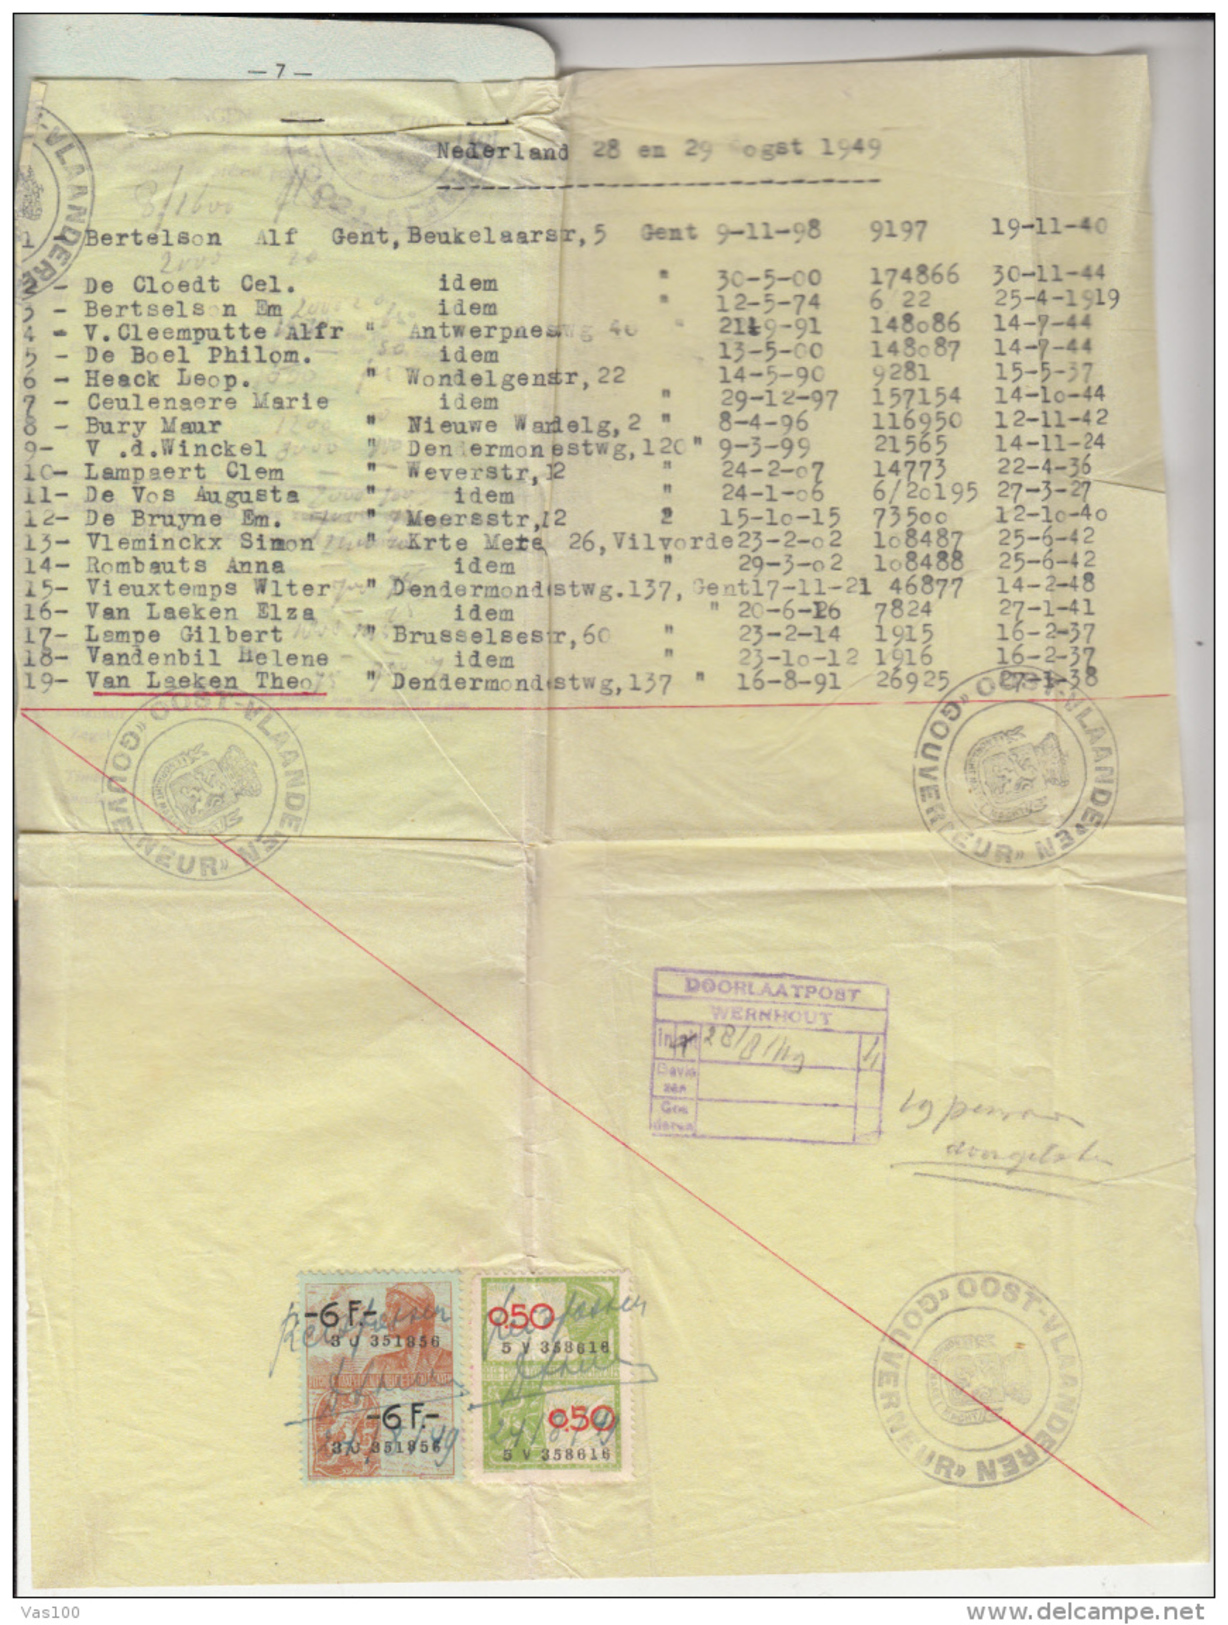 PASSPORT, PHOTO ID, REVENUE STAMP, 46 PAGES, 1949, BELGIUM - Historical Documents